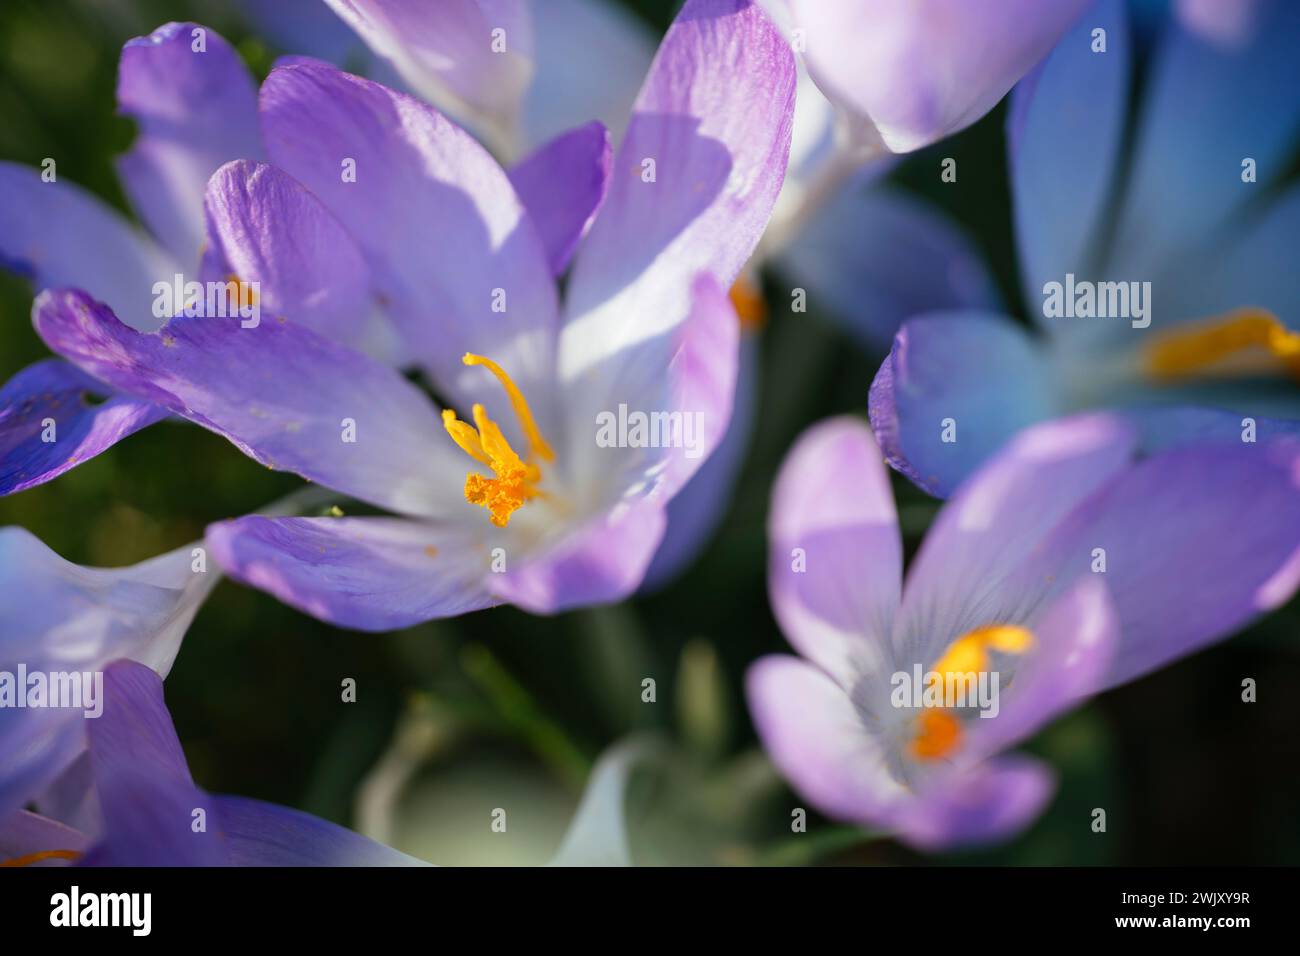 Crocus flowers in February Stock Photo